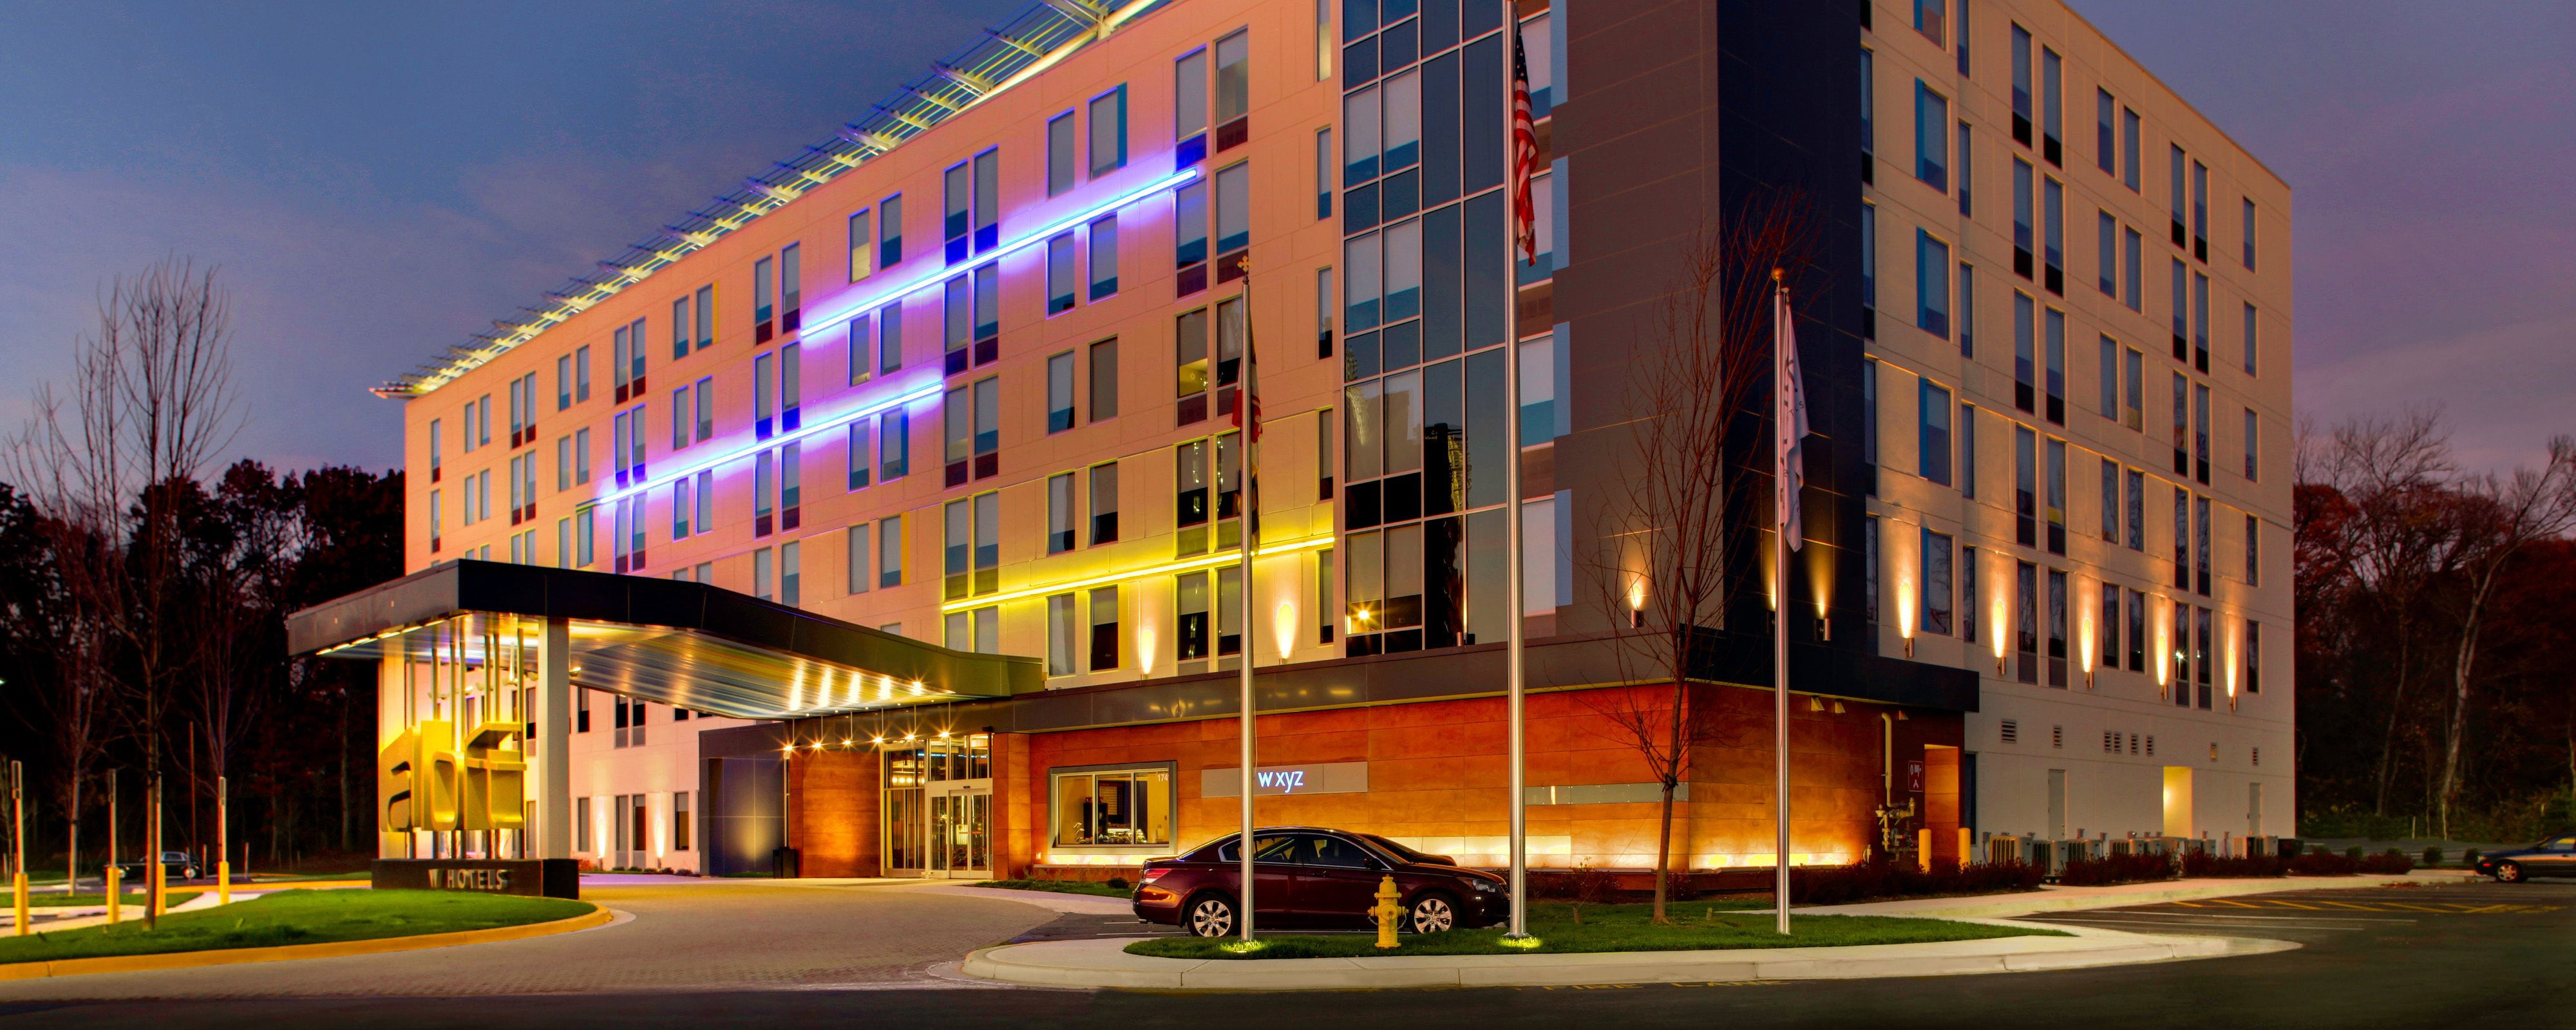 Linthicum Hotel Reviews Aloft Bwi Baltimore Washington